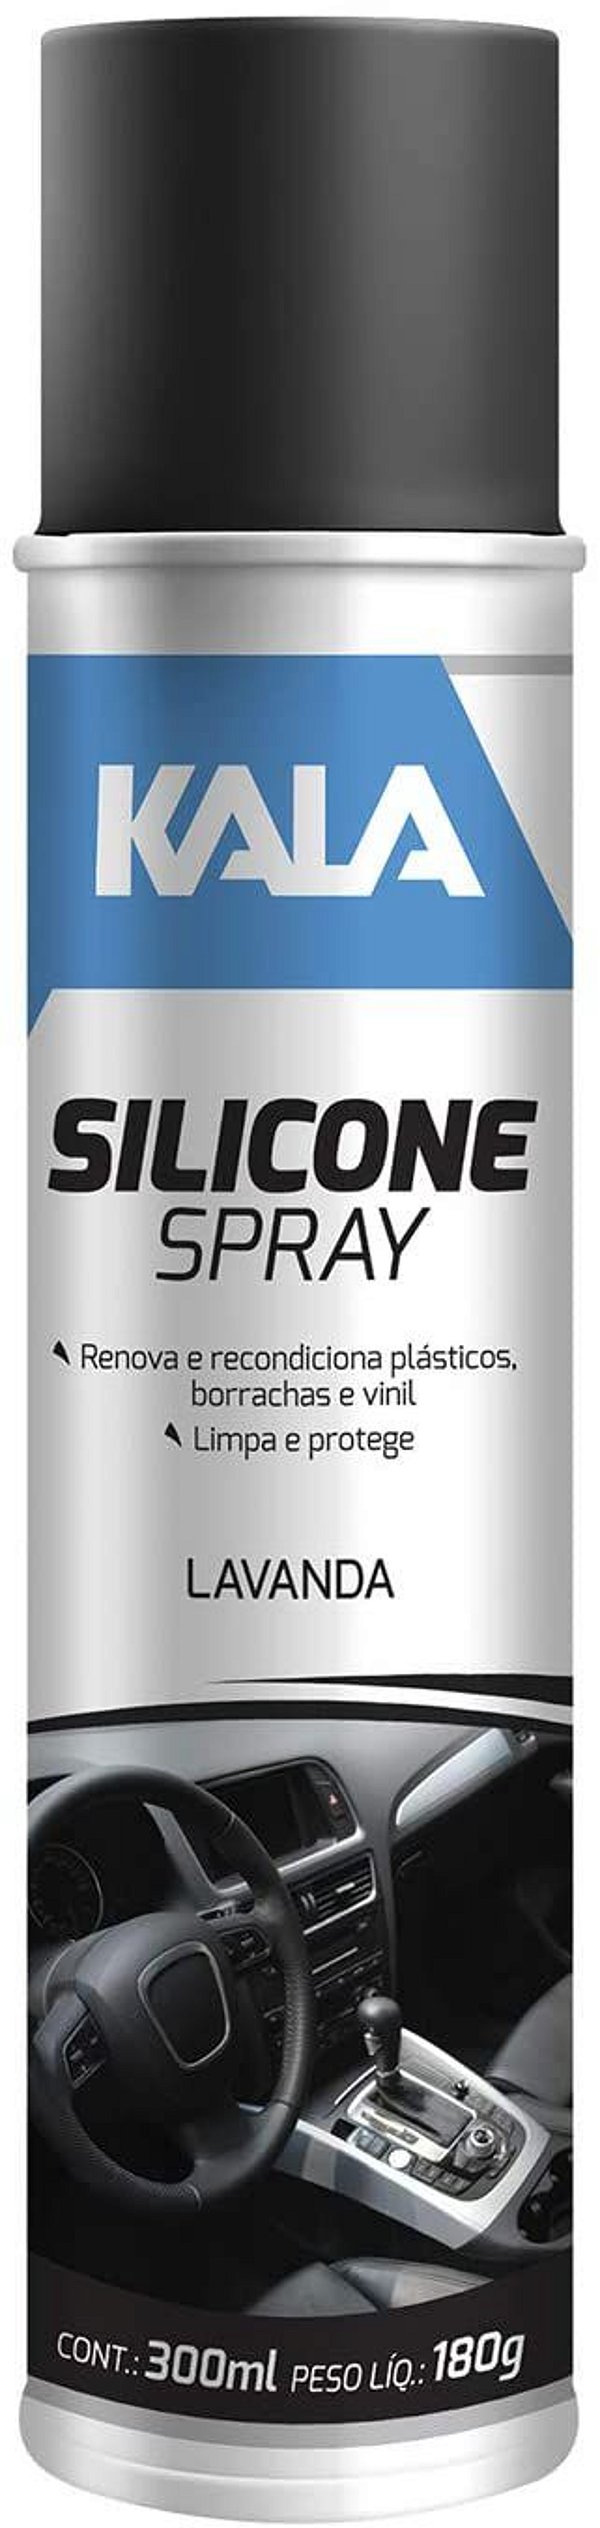 Kala Silicone Spray 300 ml